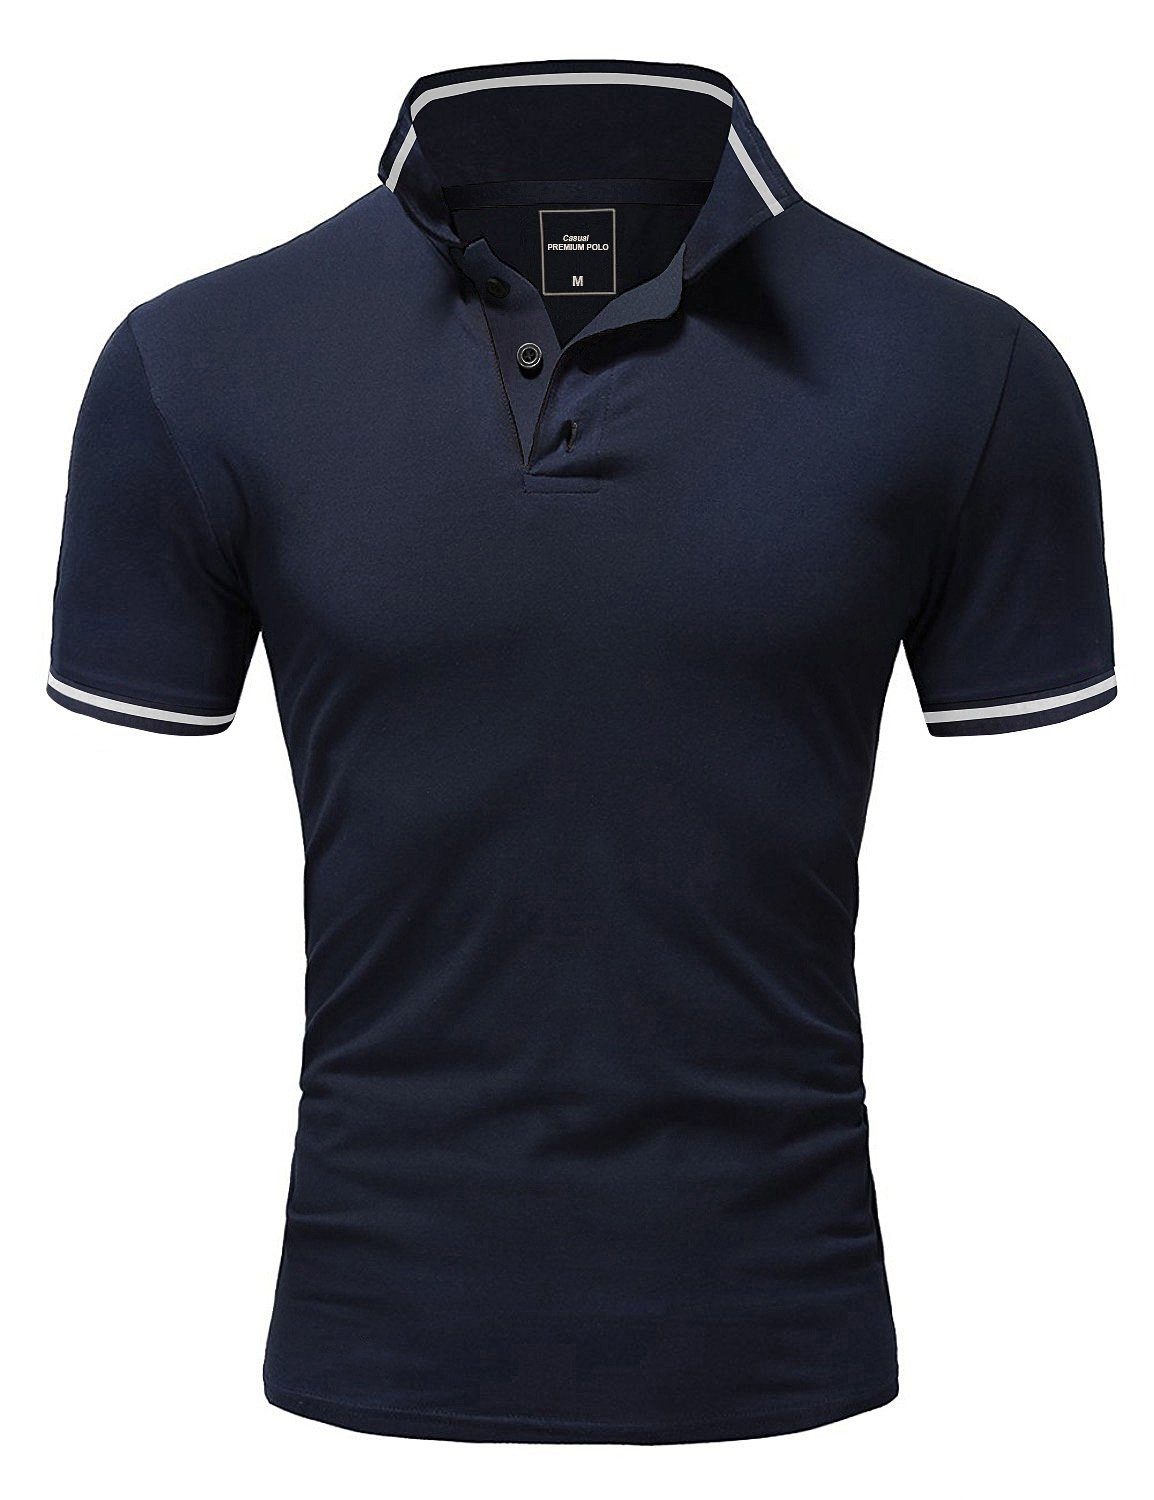 Amaci&Sons Poloshirt PROVIDENCE Herren Navyblau/Weiß Kurzarm Polohemd Kontrast Basic T-Shirt